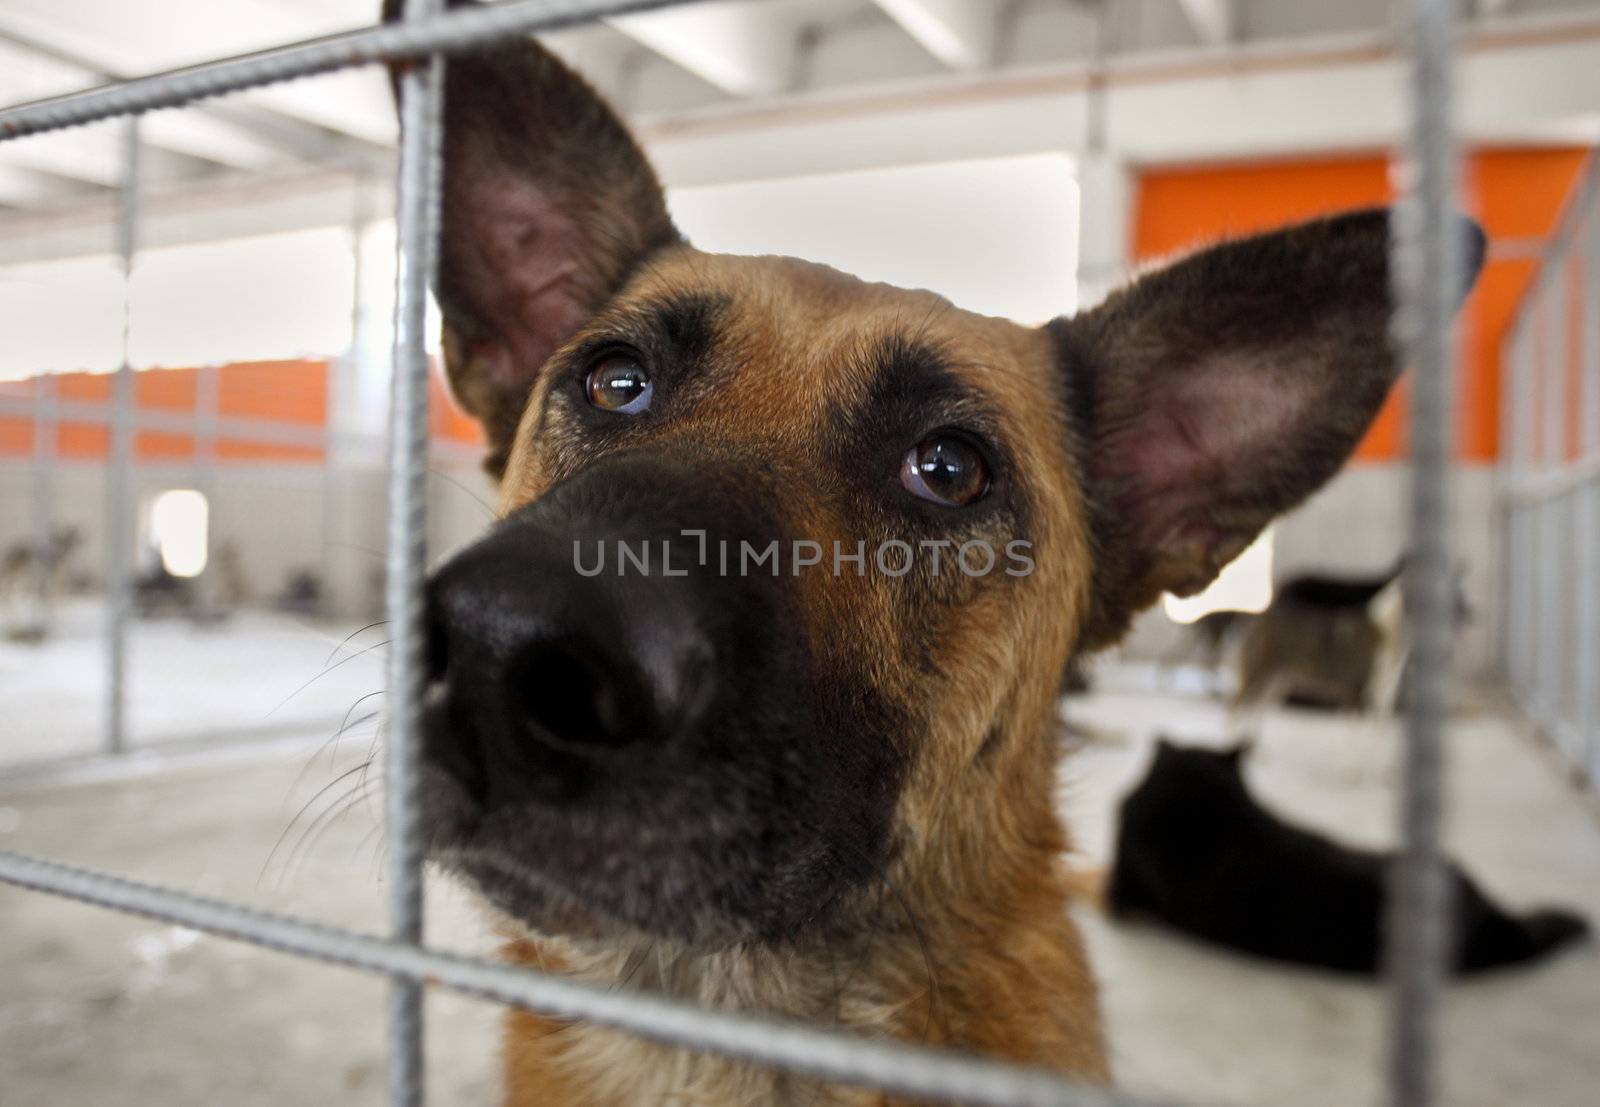 Close-up of homeless dog in a shelter, looking at camera behind bars